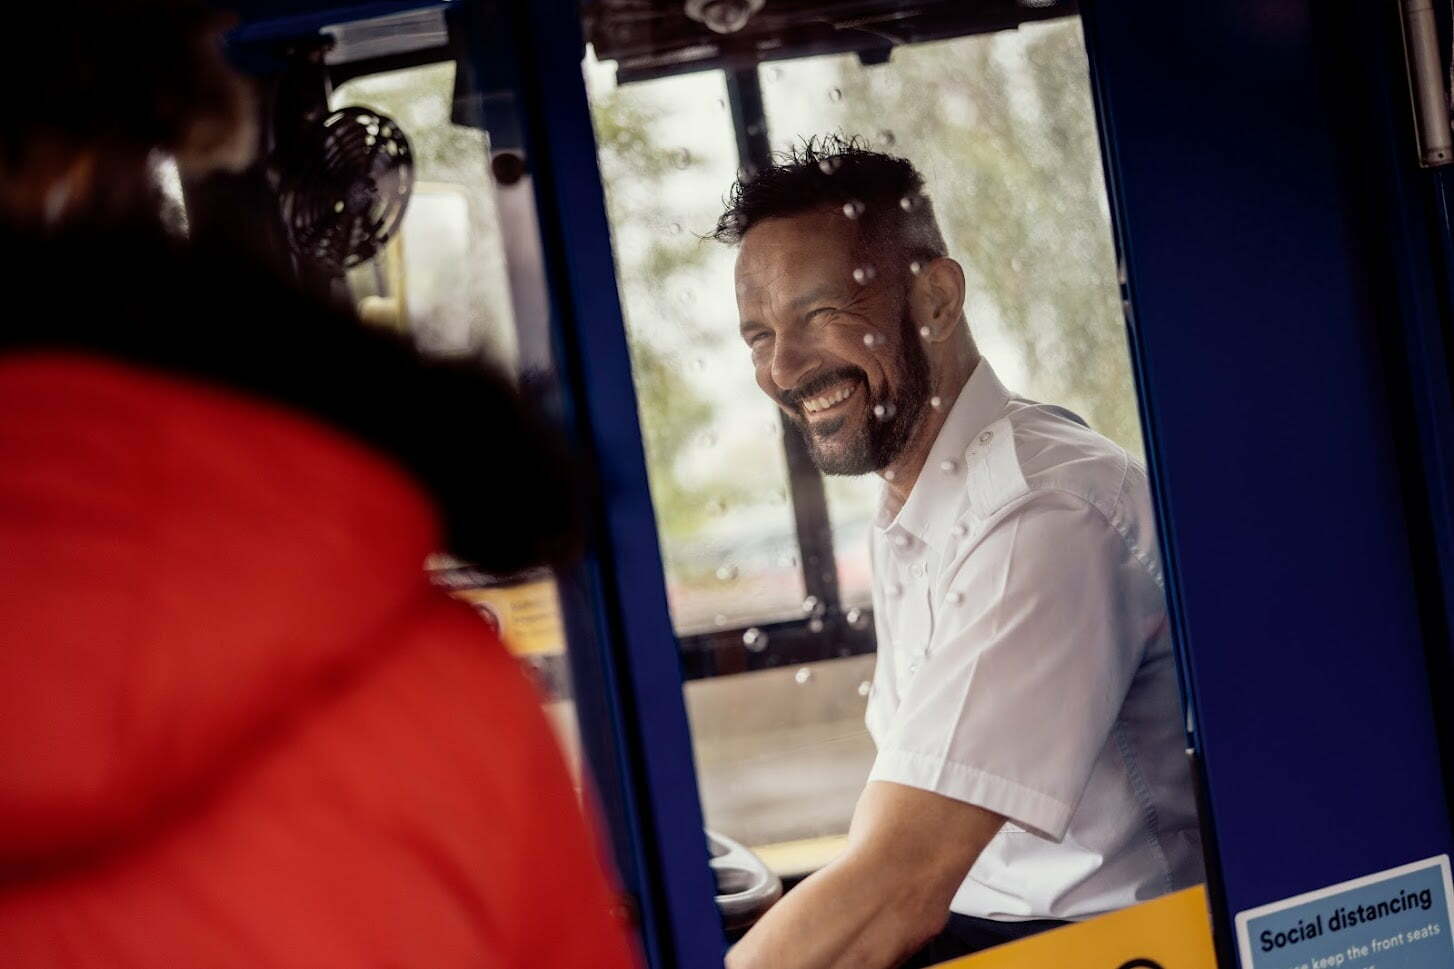 Bus driver smiling at passenger